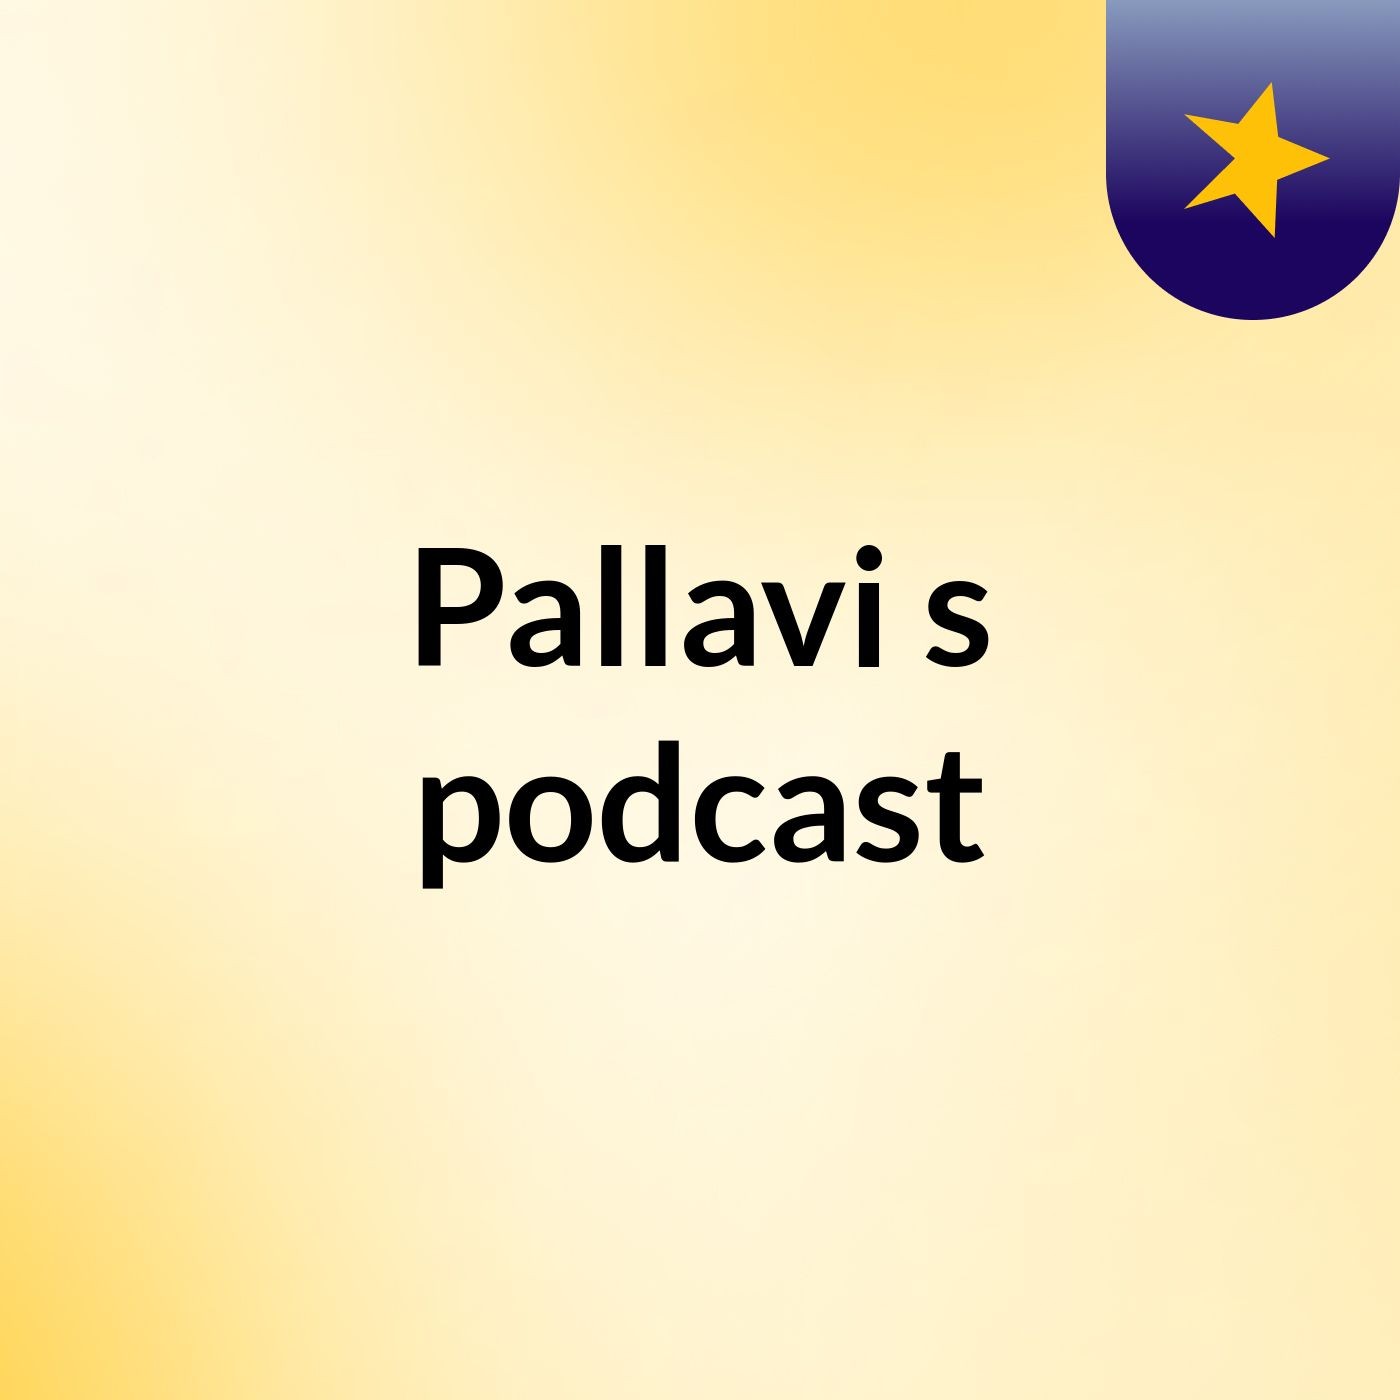 Pallavi's podcast